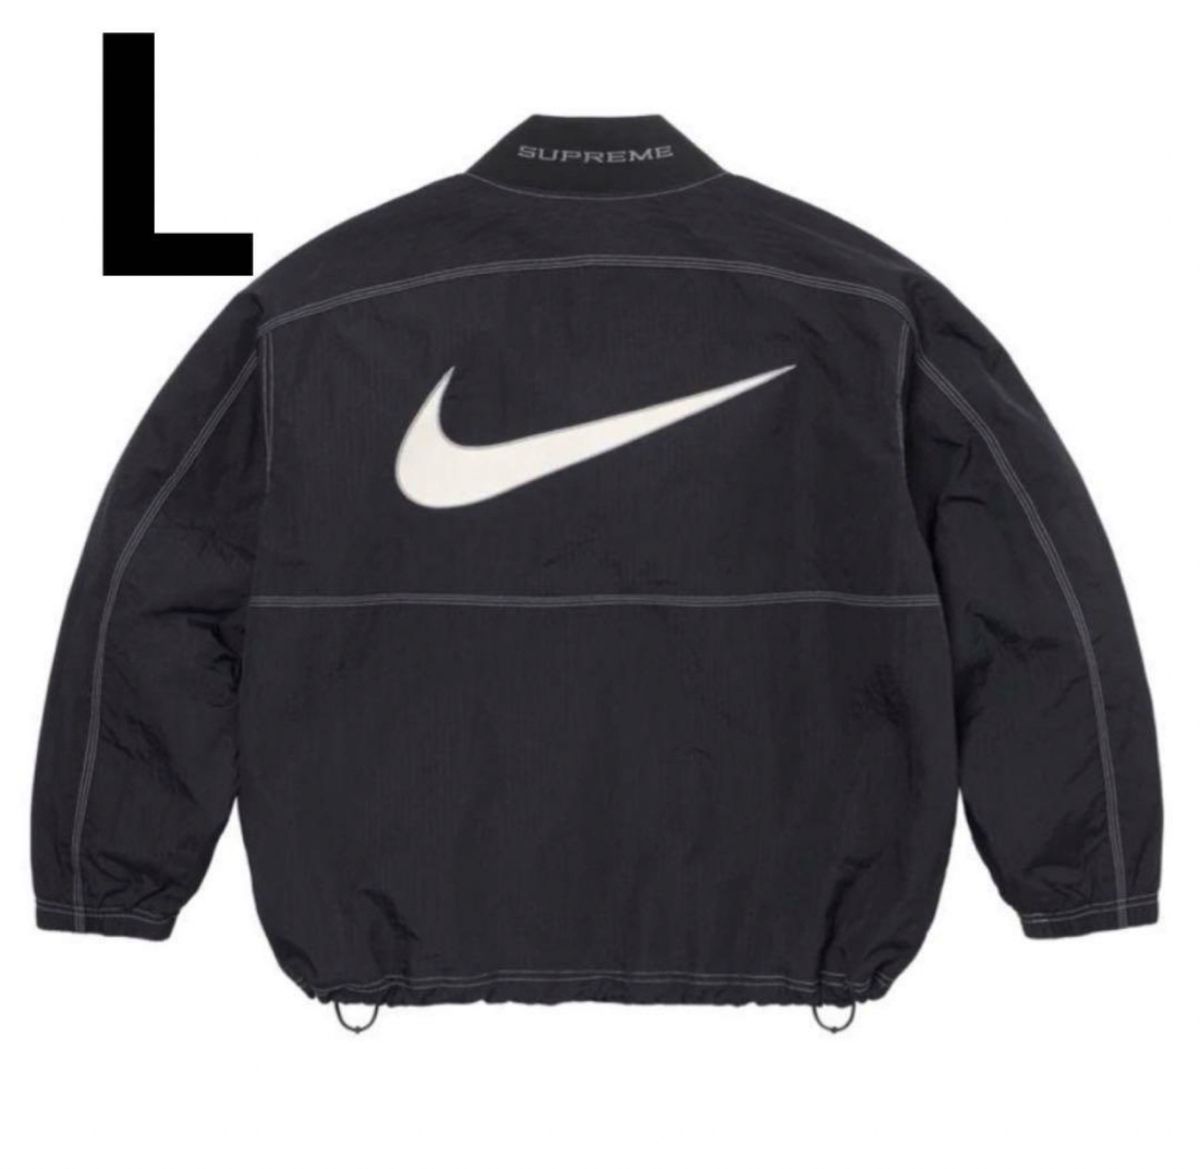 Supreme Nike Ripstop Pullover 